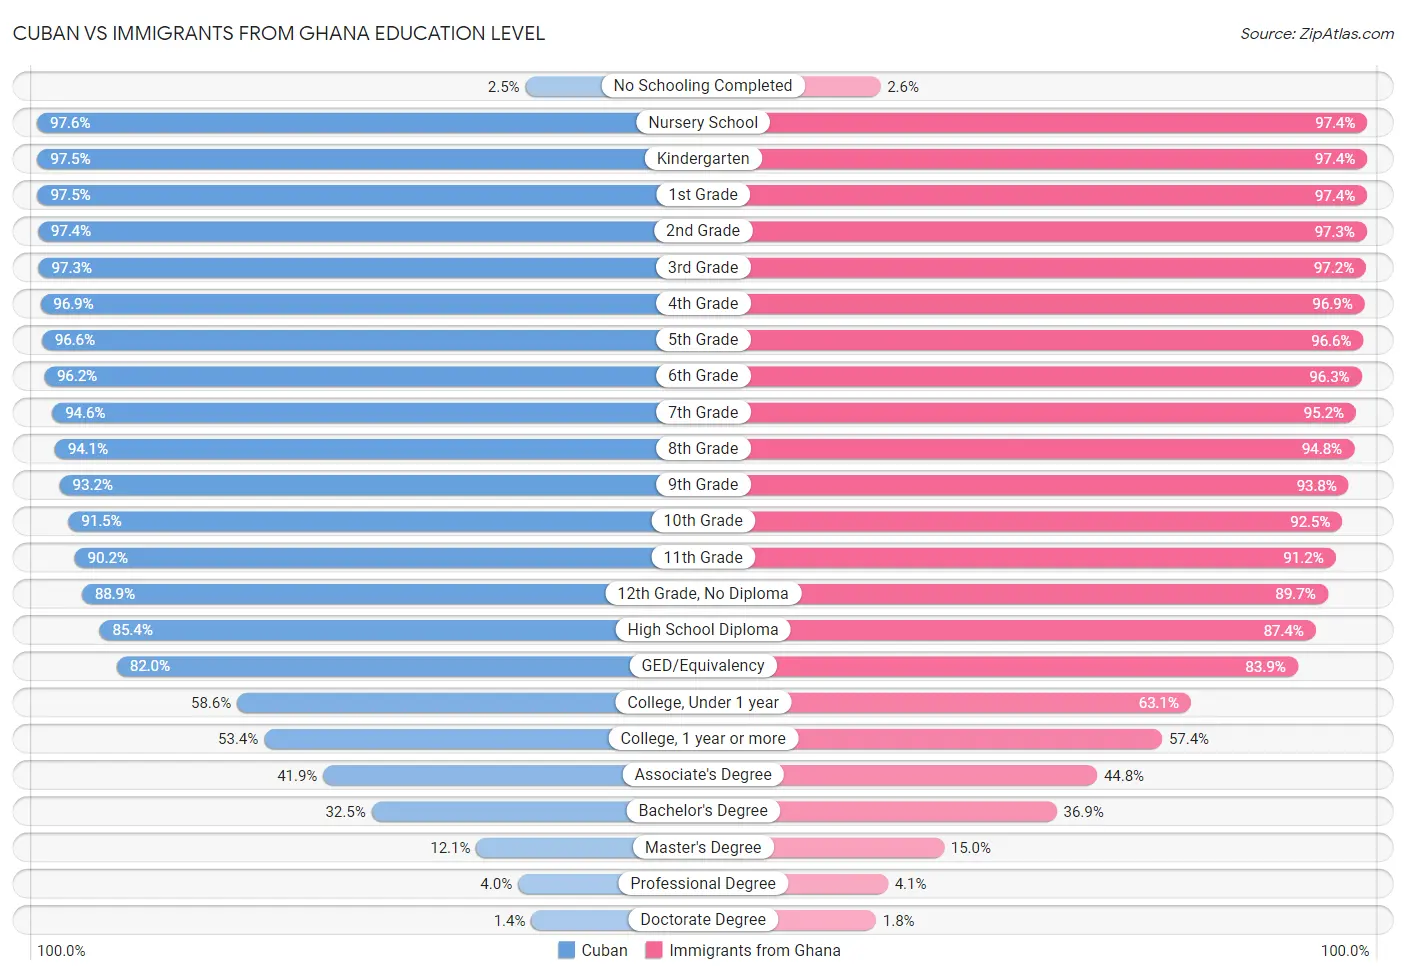 Cuban vs Immigrants from Ghana Education Level